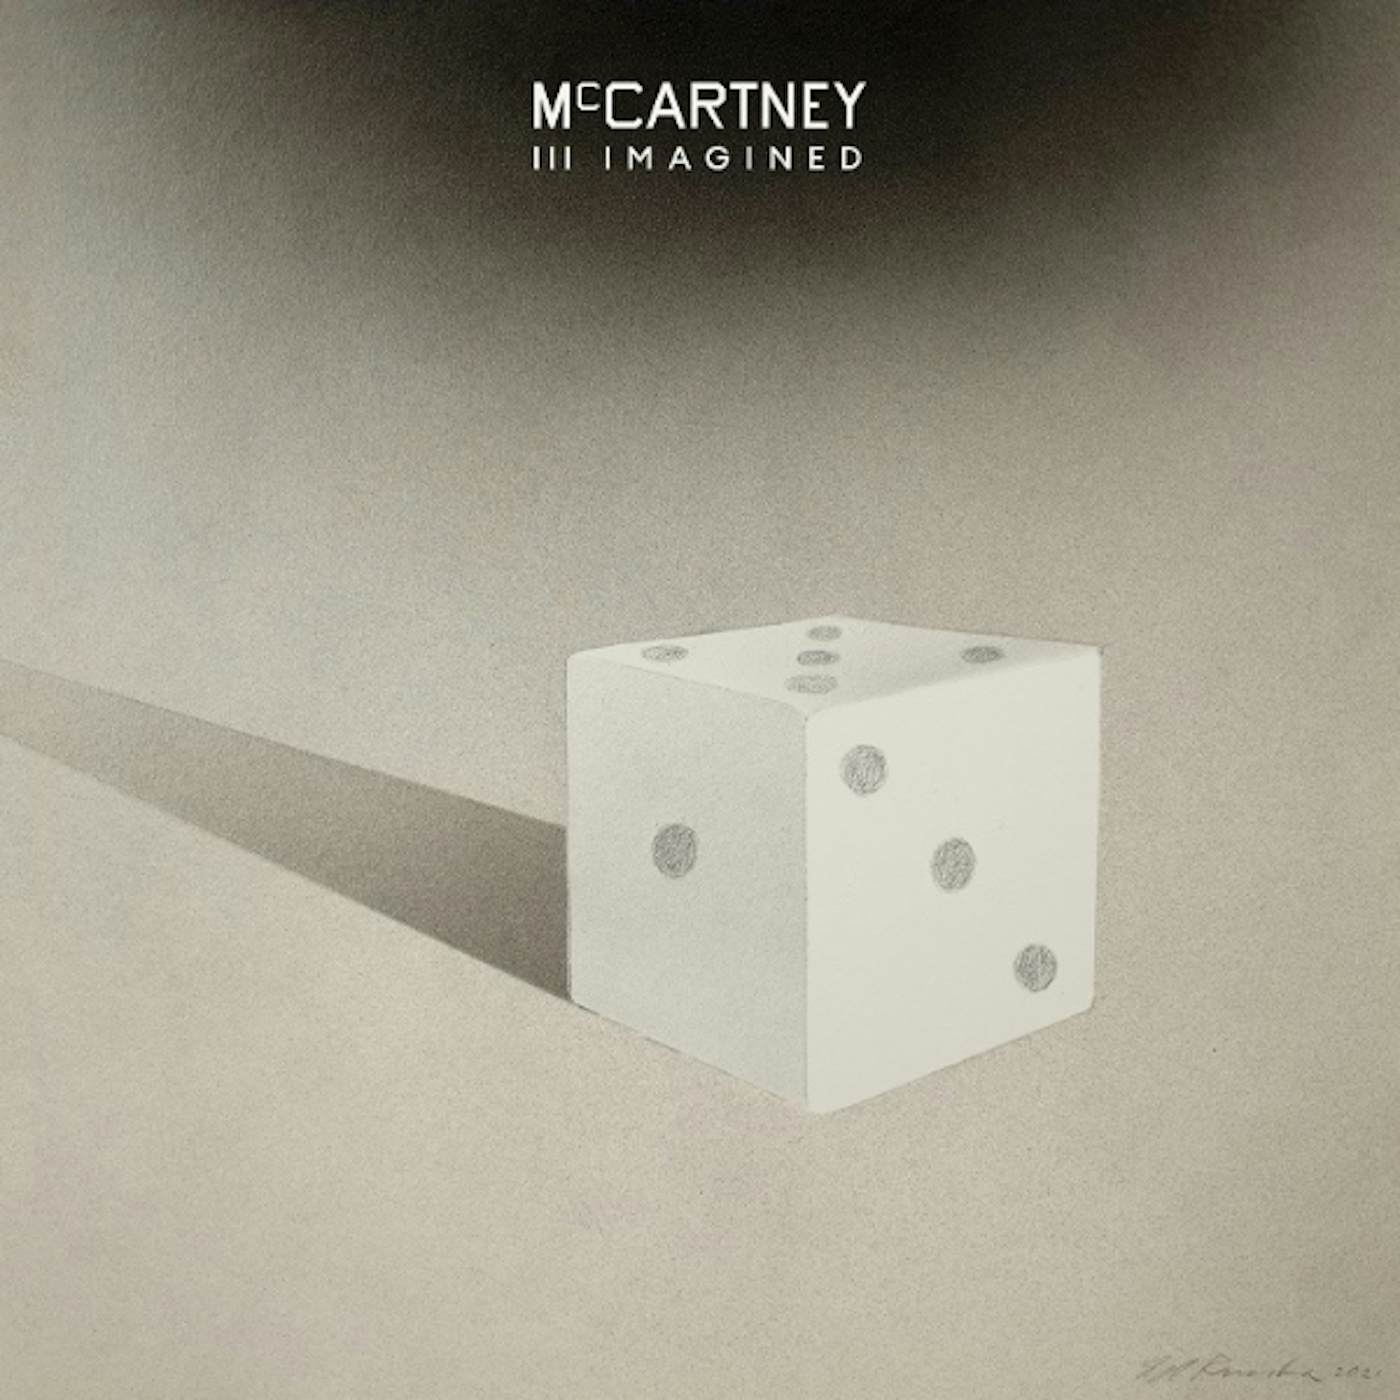 Paul McCartney McCartney III Imagined Vinyl Record